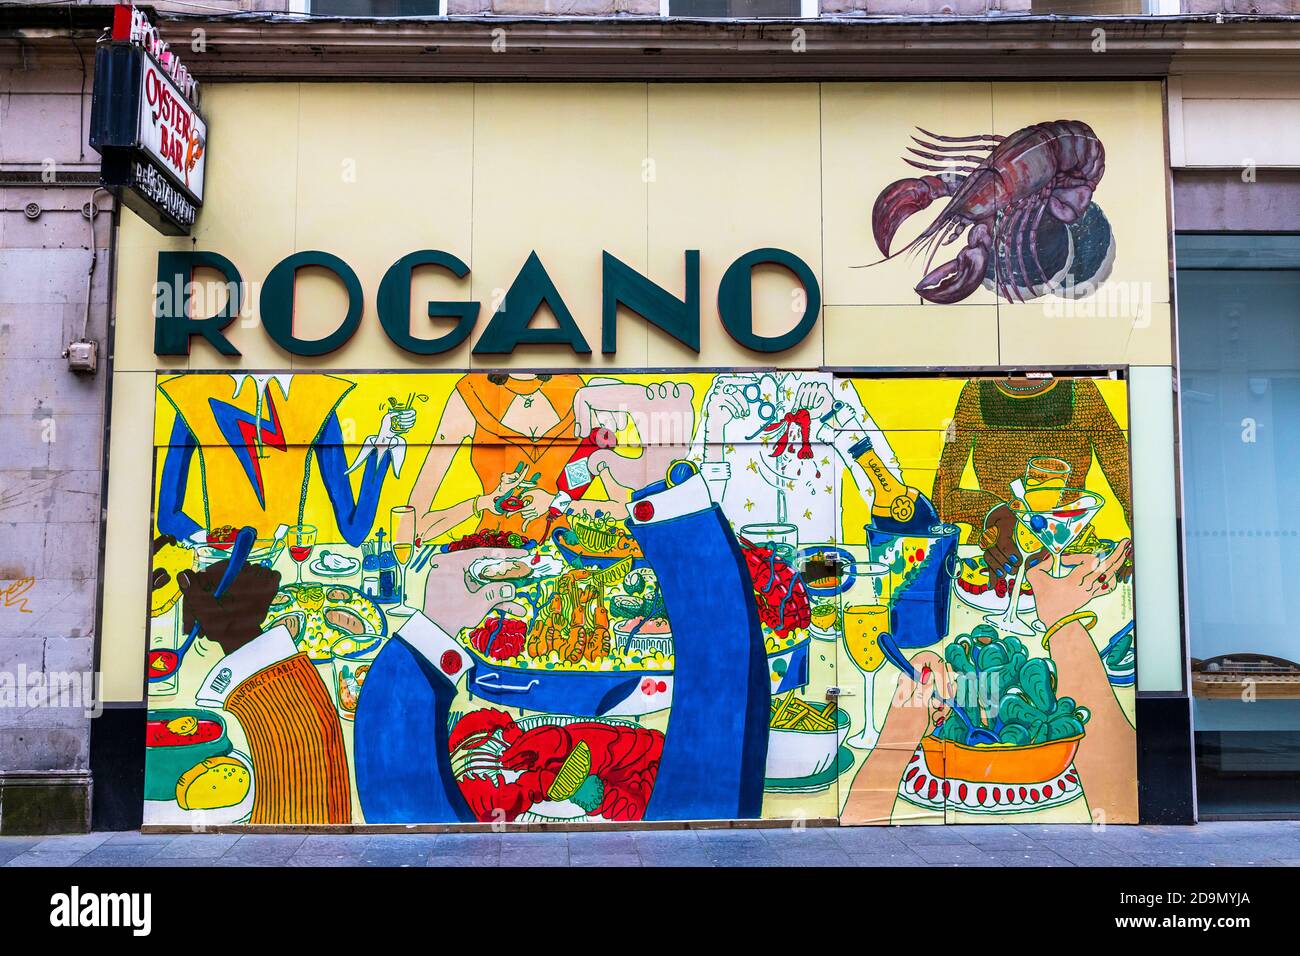 Famous fish restaurant, Rogano, in Glasgow city centre, closed because of covid 19 lockdowns, Glasgow, Scotland, UK Stock Photo